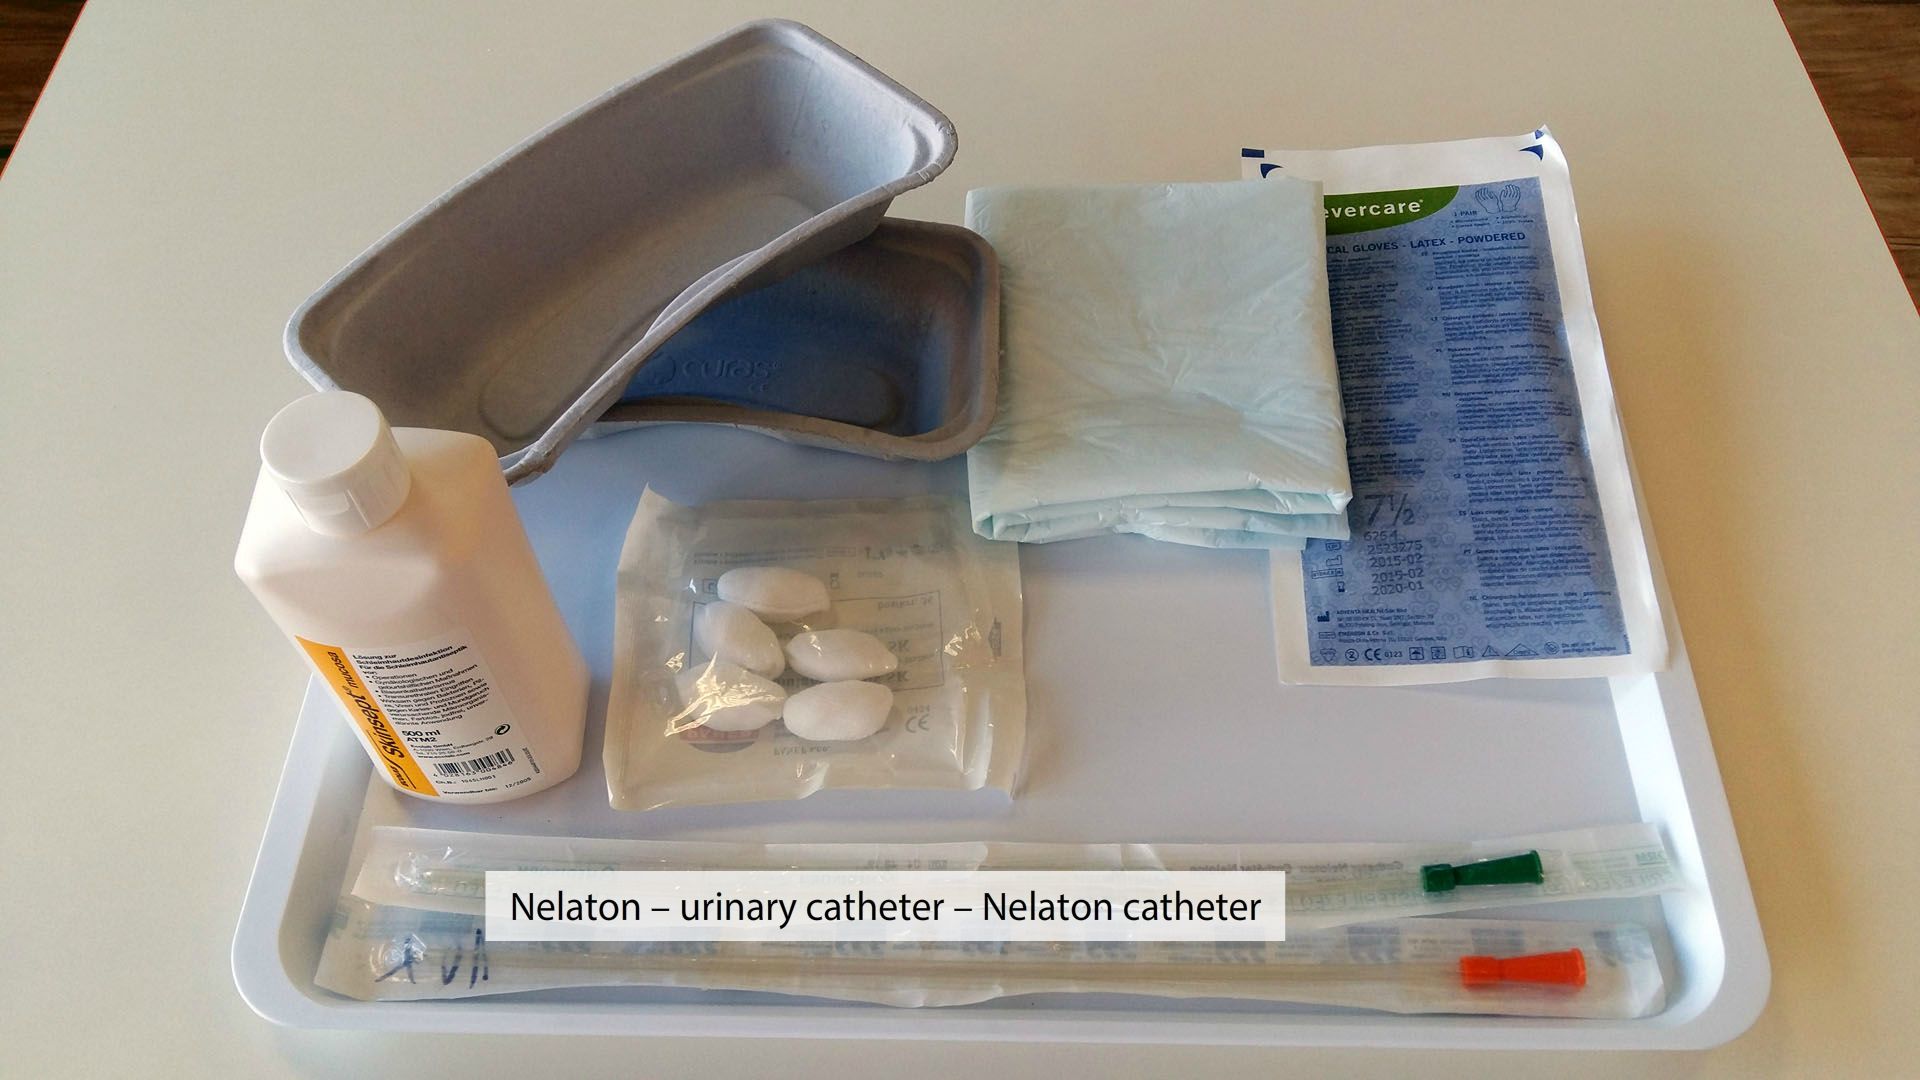 Equipment for one-time female catheterization